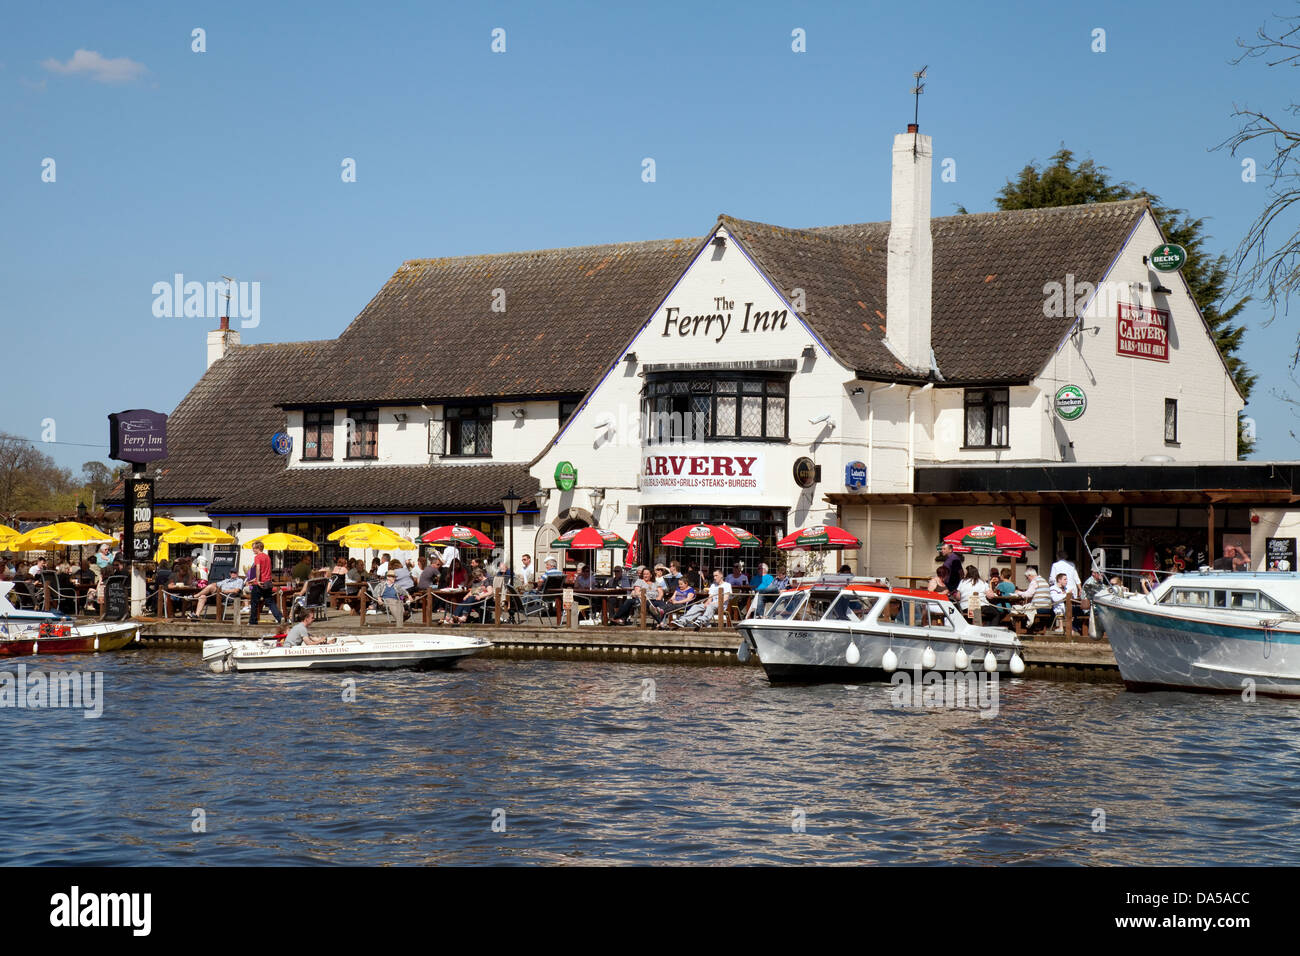 Norfolk Broads pubs inns - The ferry Inn, Horning on the River Bure,  Norfolk, East Anglia, UK Stock Photo